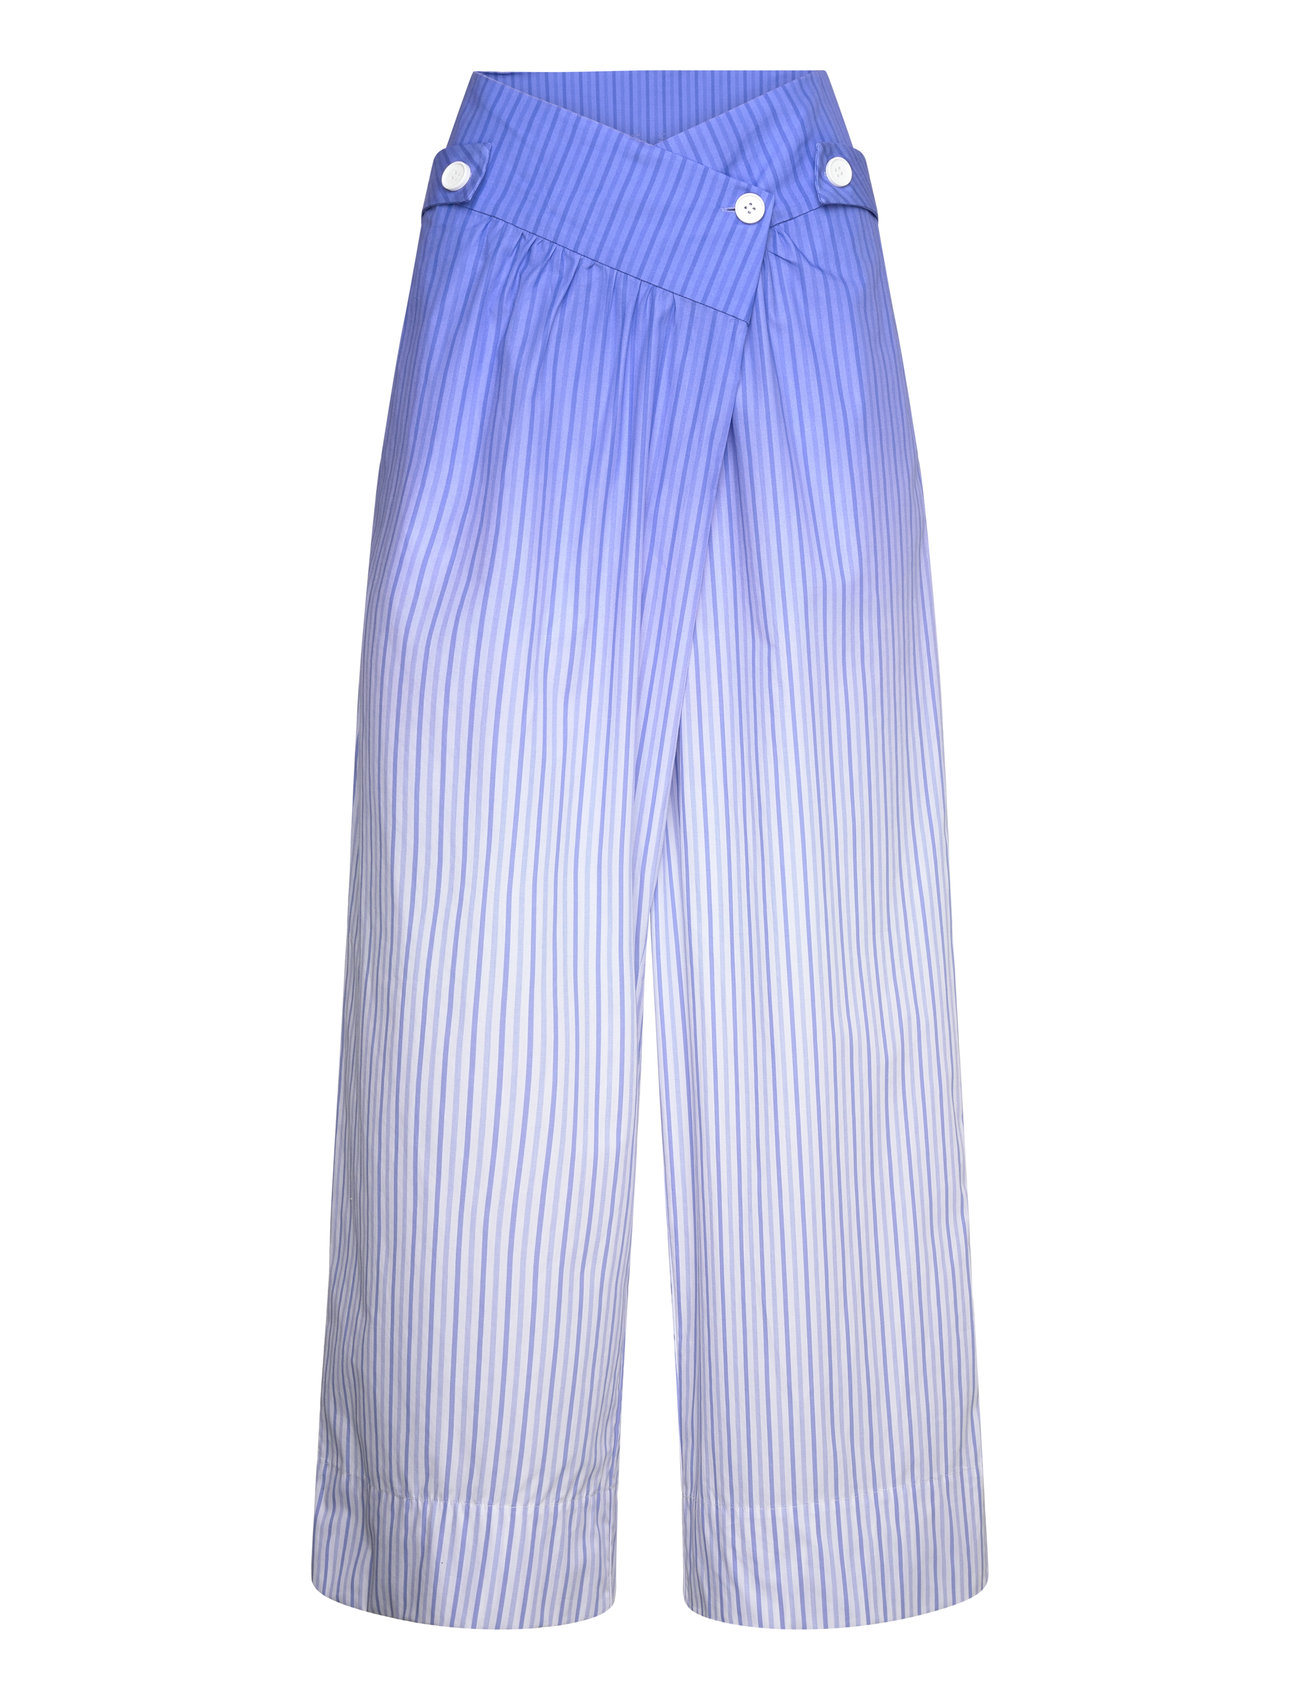 Sgasta, 2000 Printed Poplin Designers Trousers Wide Leg Blue STINE GOYA